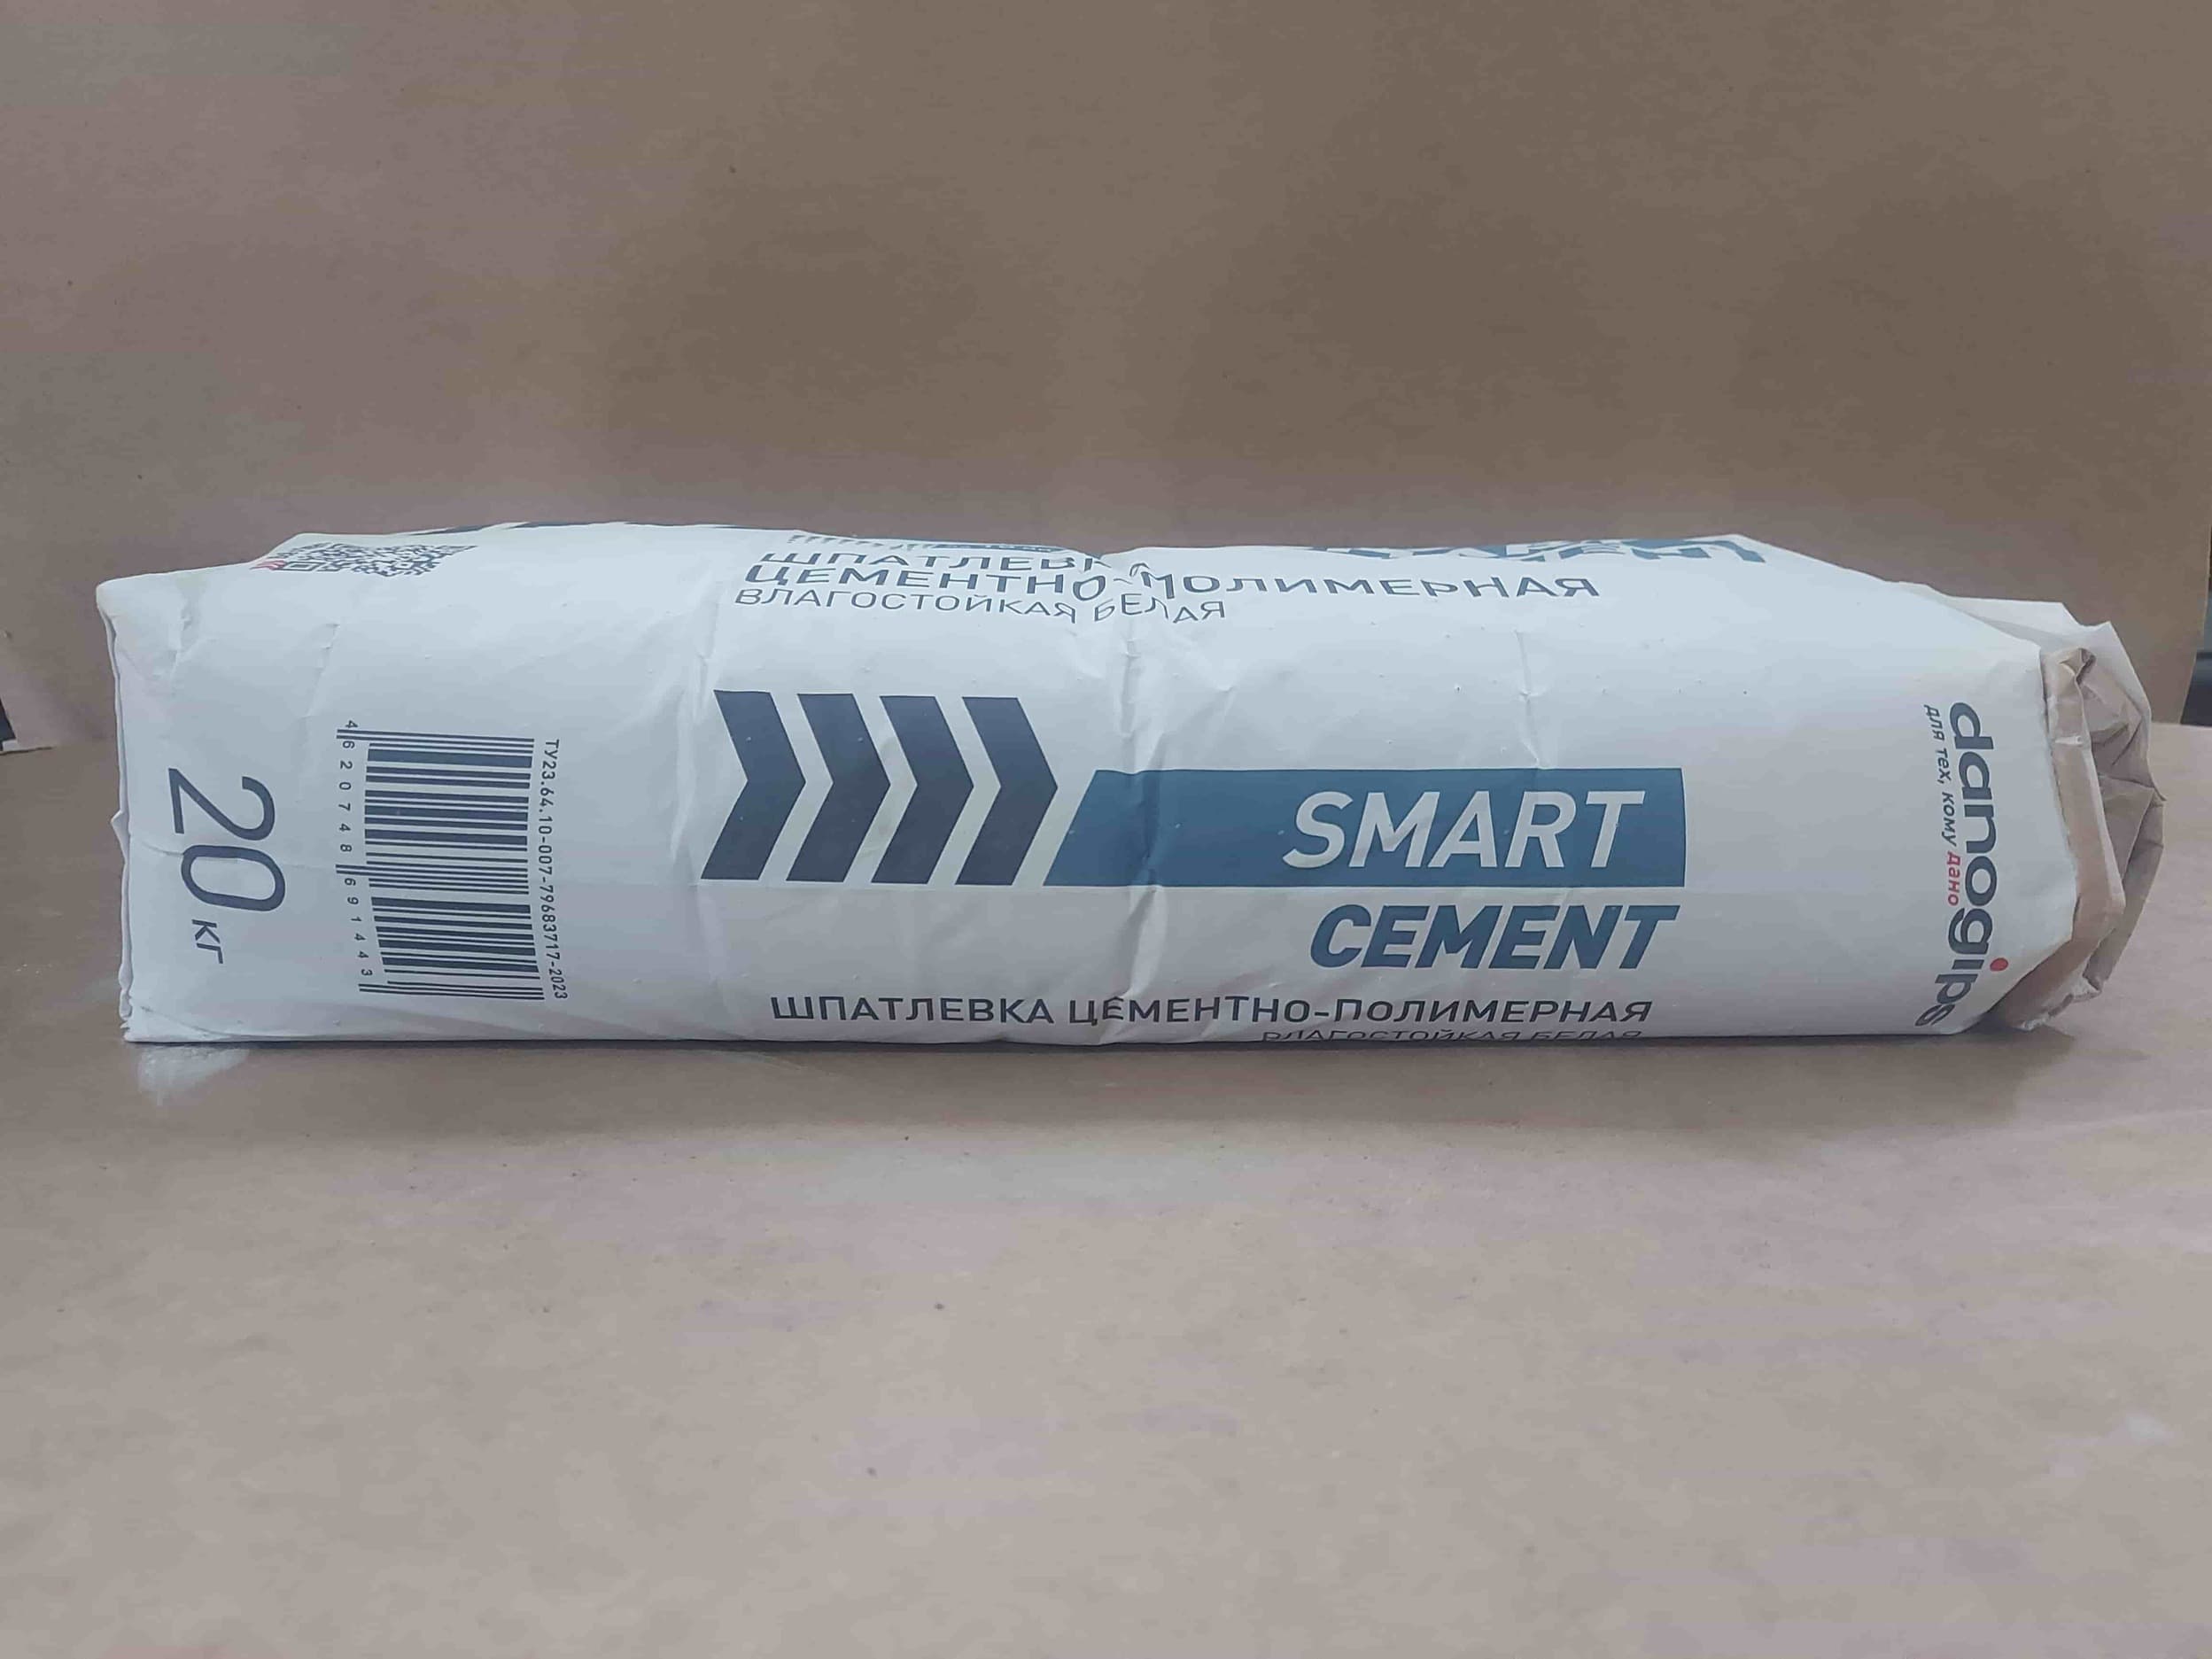 DANOGIPS SmartCement шпатлевка цементно-полимерная 20 кг								